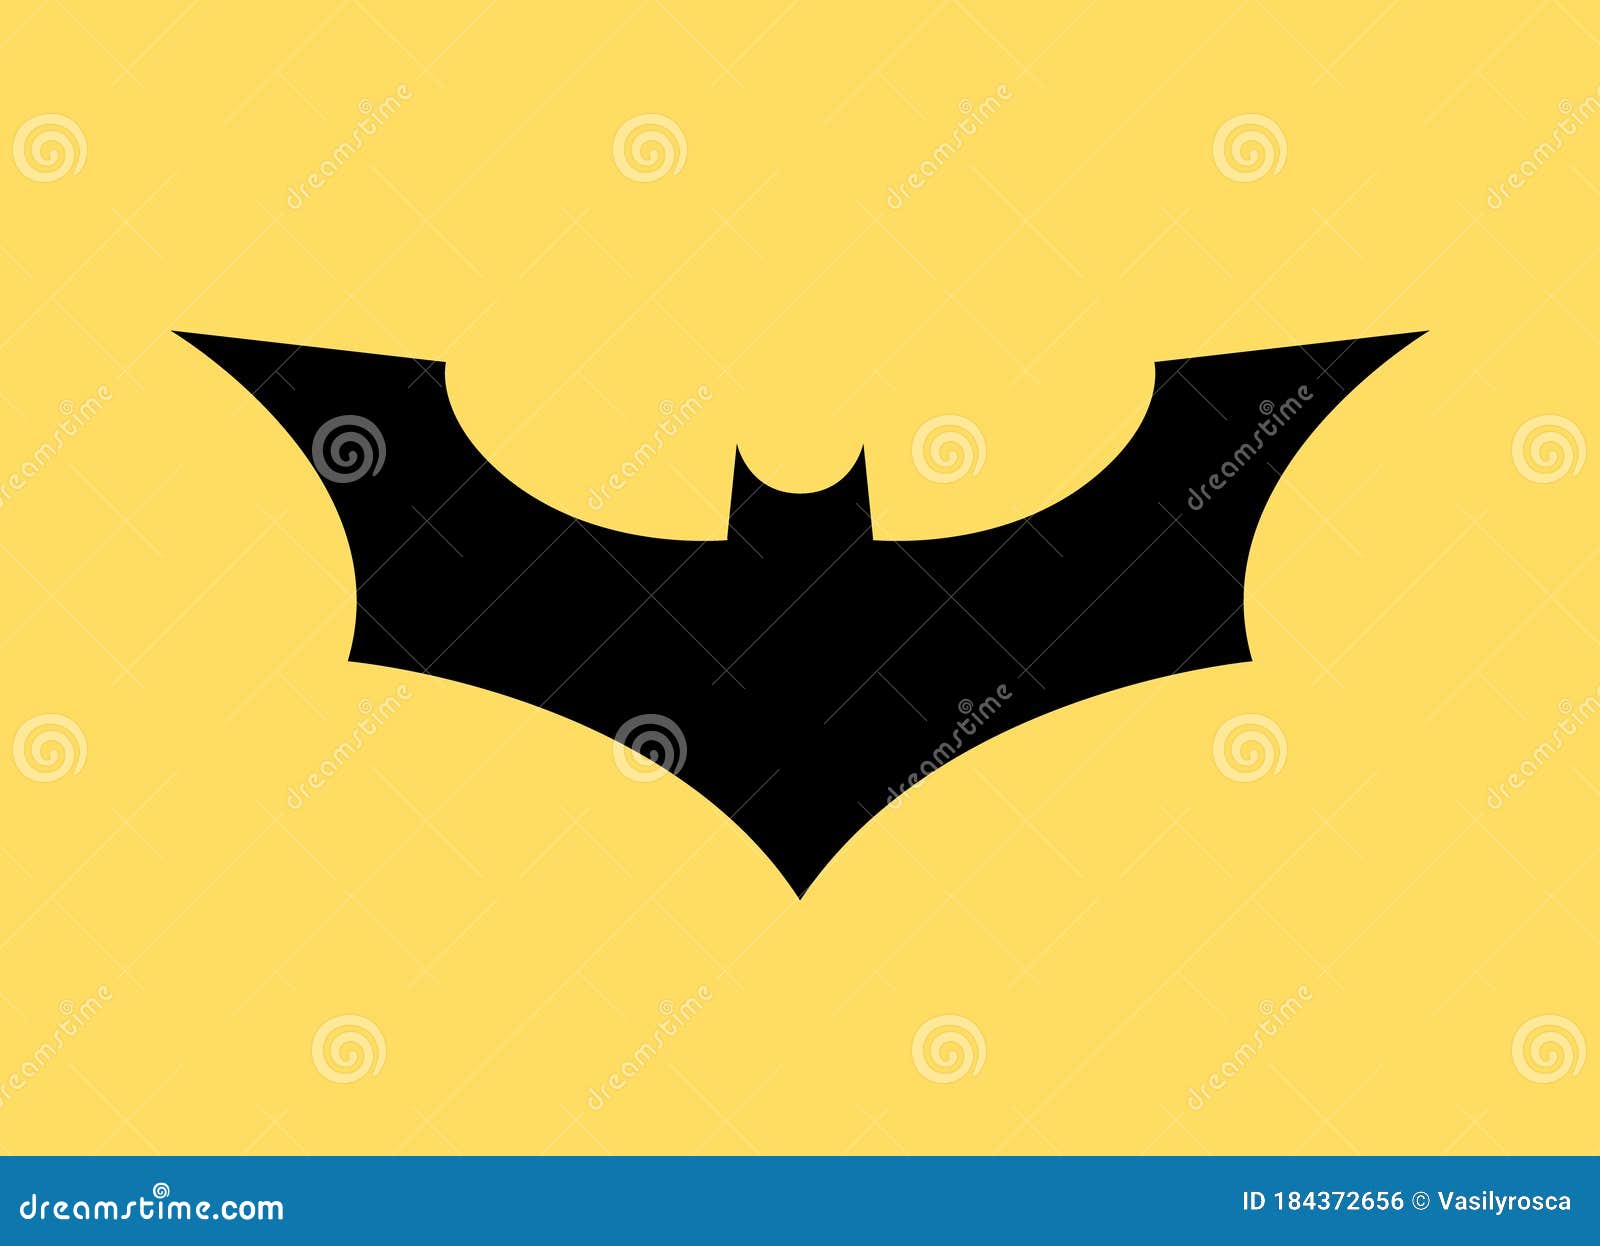 Batman Vector Logo Concept Icon. Bat Man Dark Knight Superhero Cartoon  Abstract Icon Stock Vector - Illustration of night, animal: 184372656